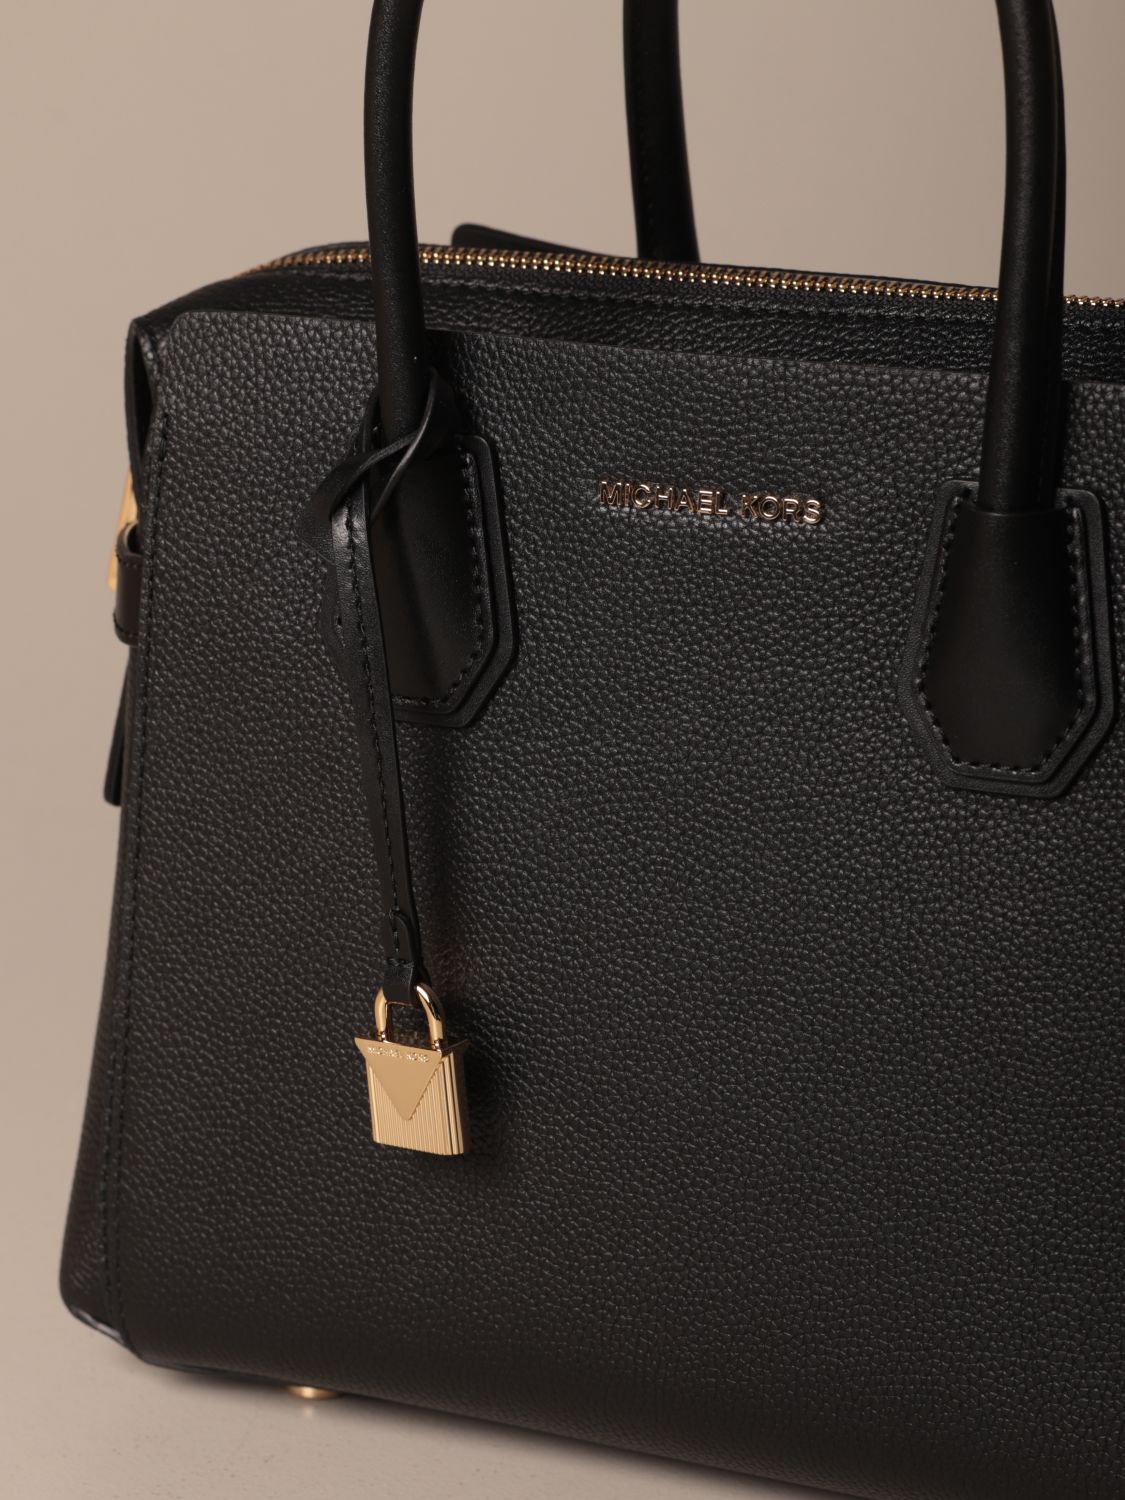 Mercer Michael Michael Kors bag in textured leather | Handbag Michael Michael Kors Women Black